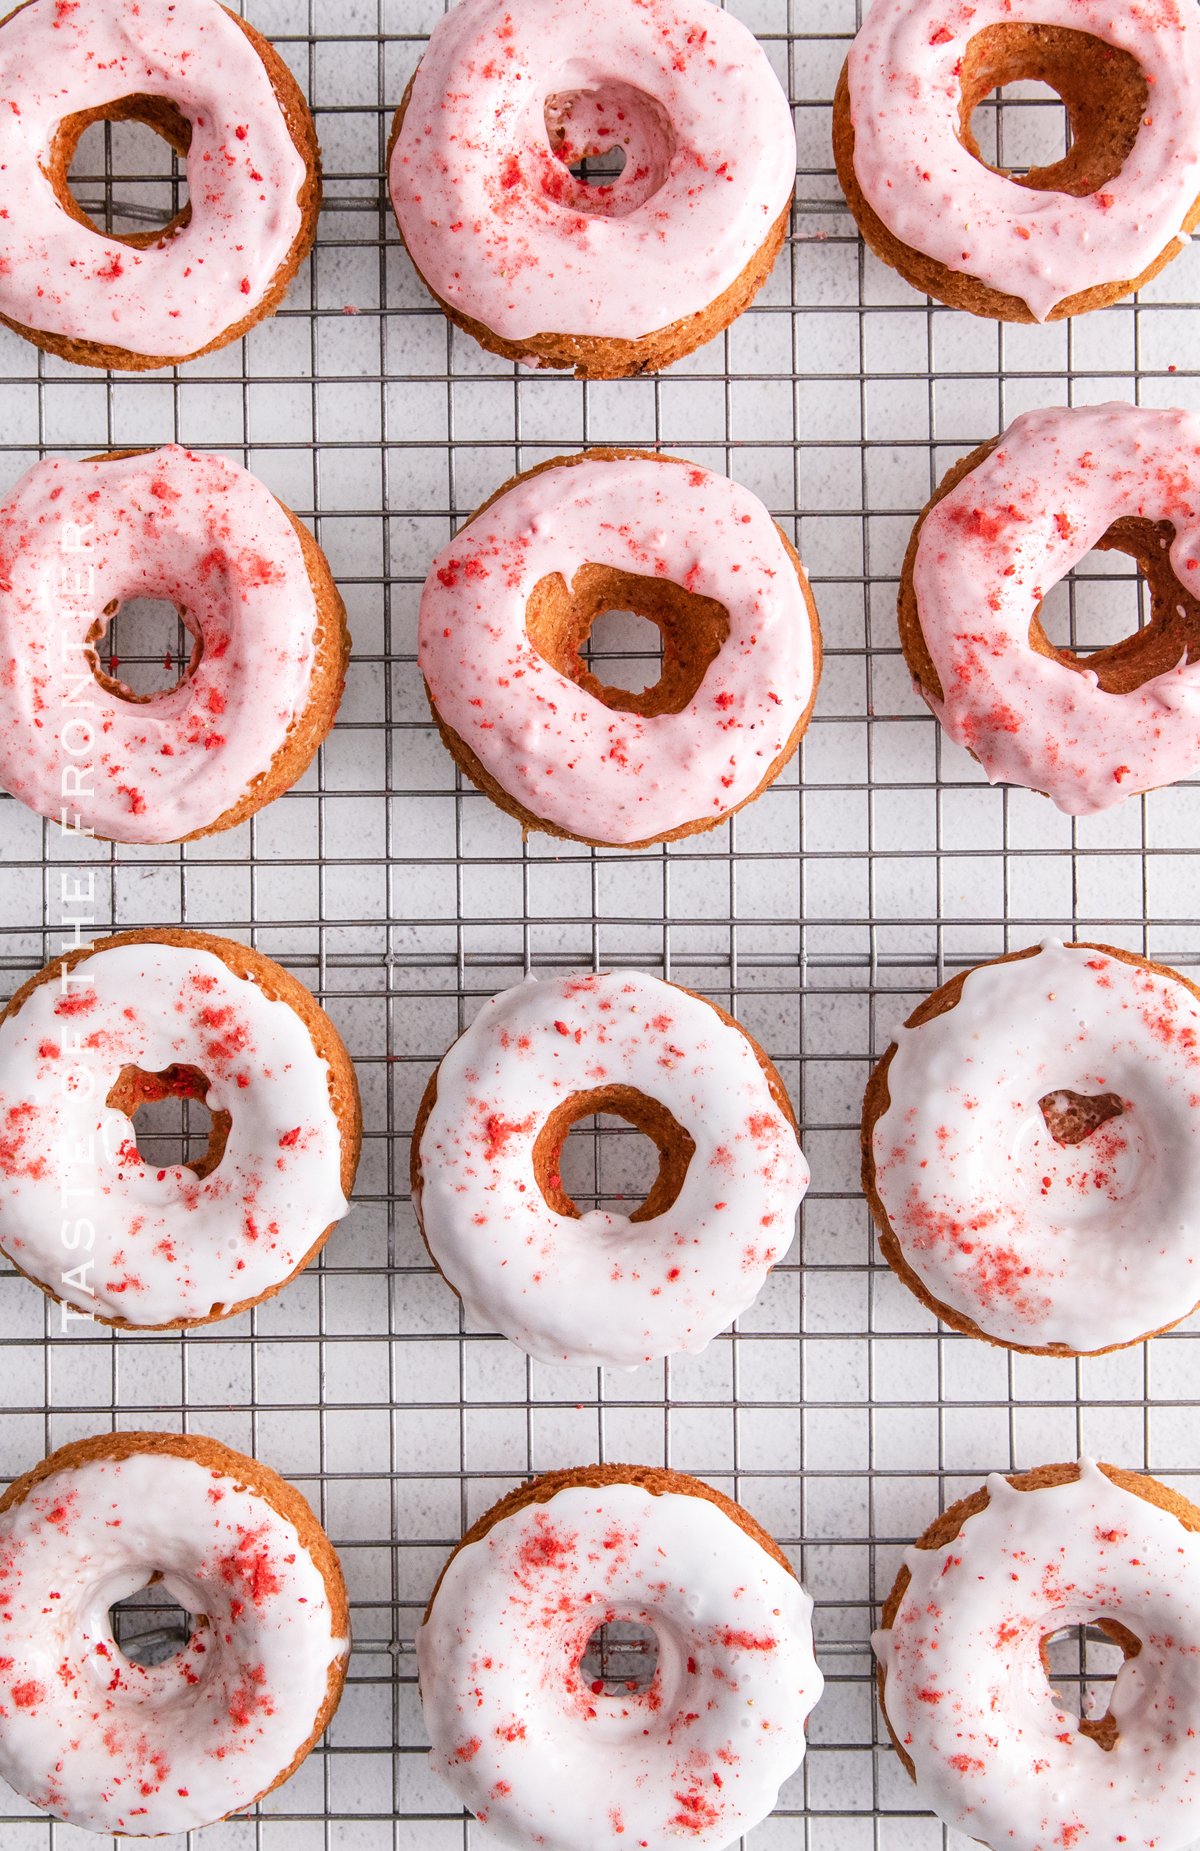 glazed donuts with strawberries